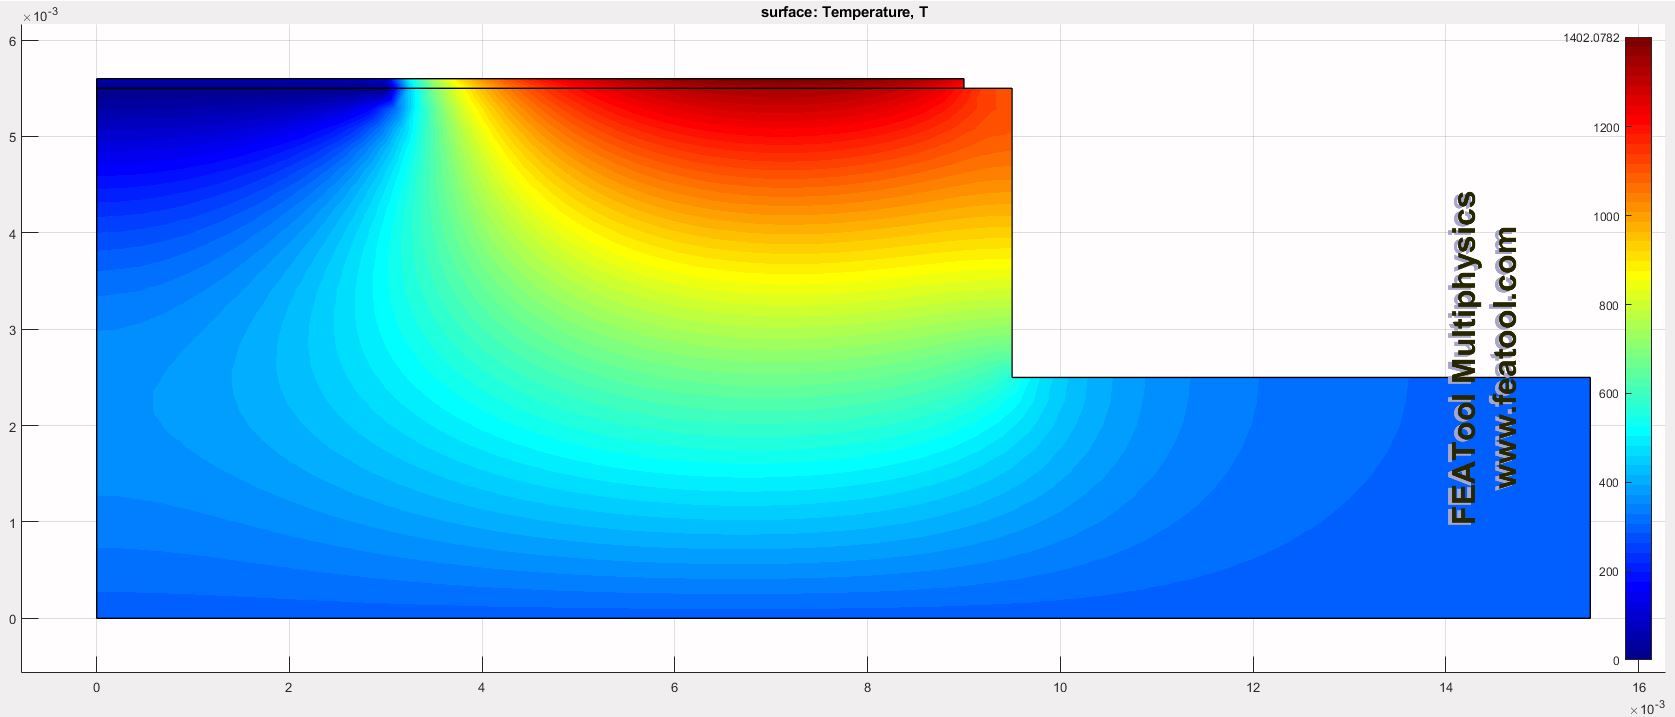 heat flux simulation